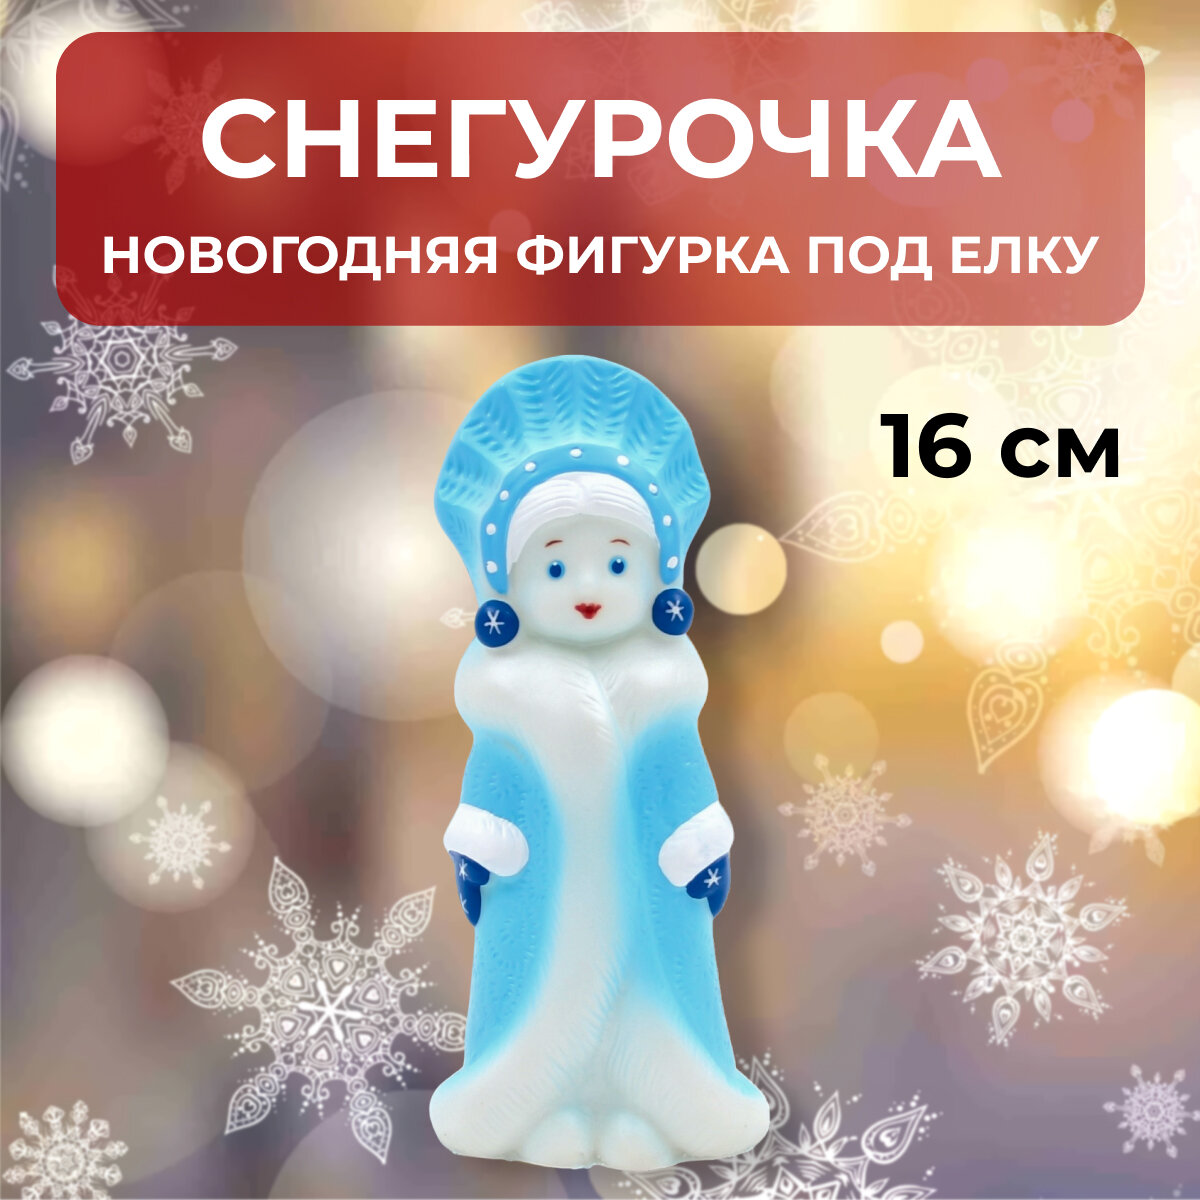 Кудесники: Снегурочка - фигурка-игрушка из ПВХ Пластизоля (Резиновая игрушка) СИ-135